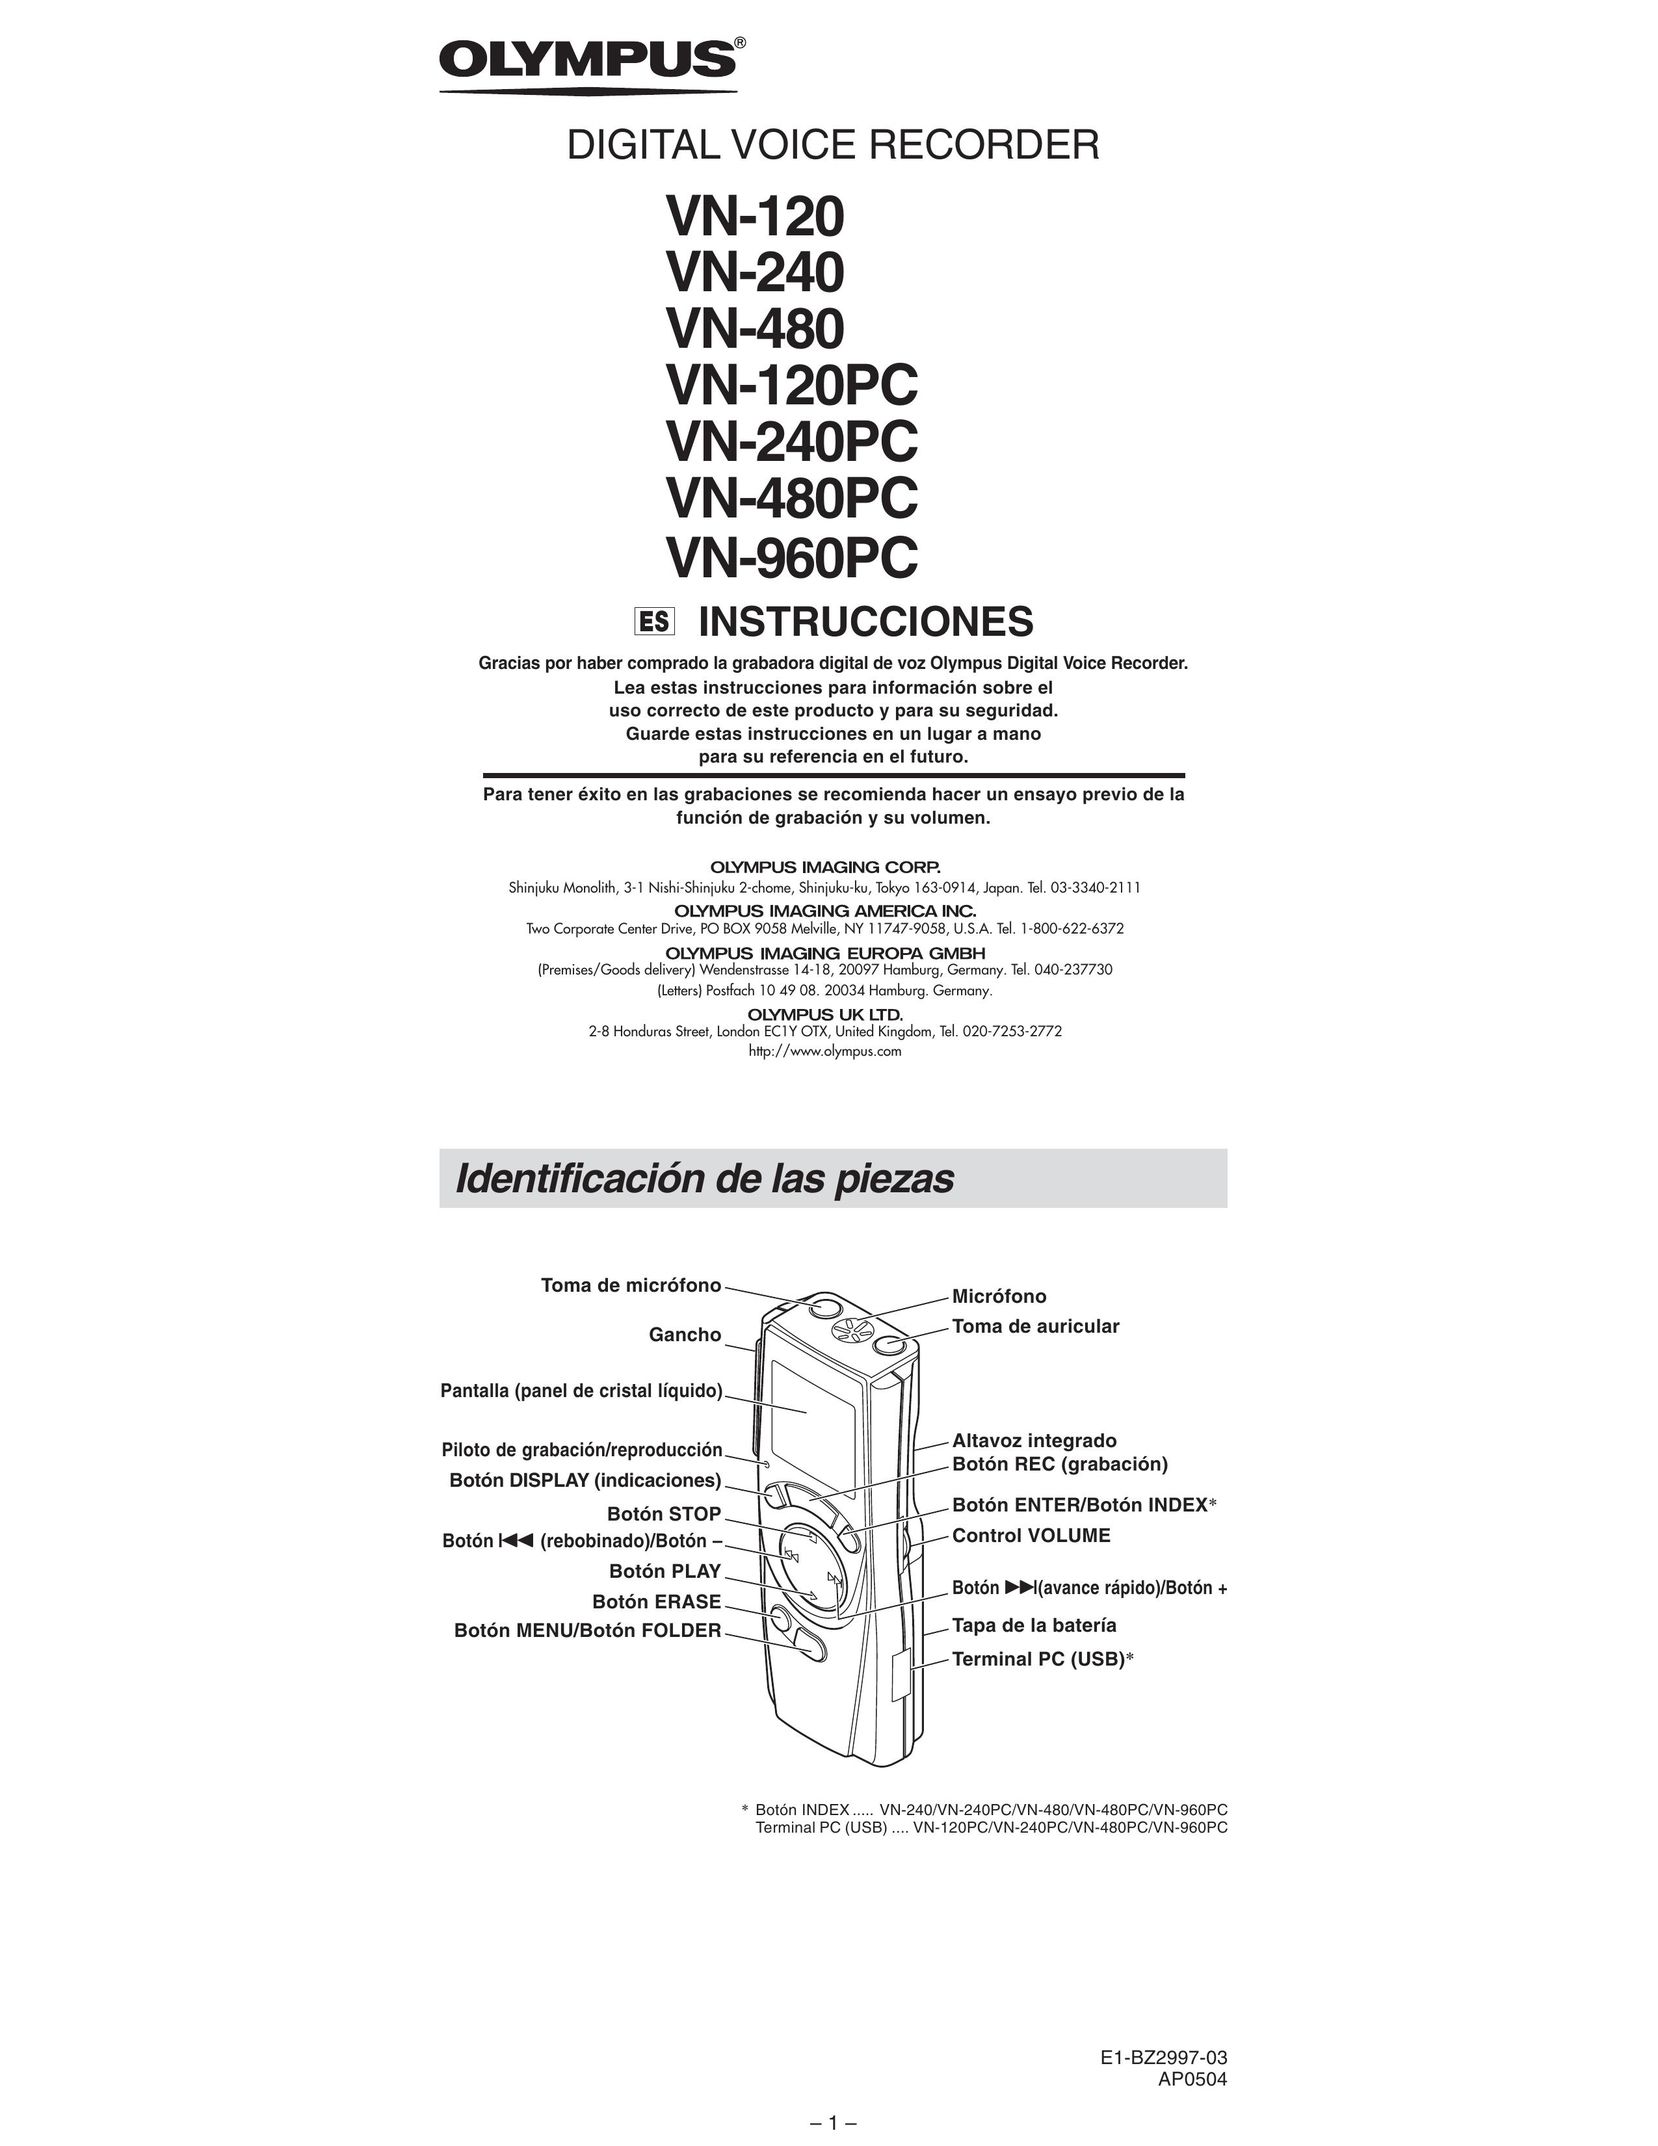 Olympus 960PC MP3 Player User Manual